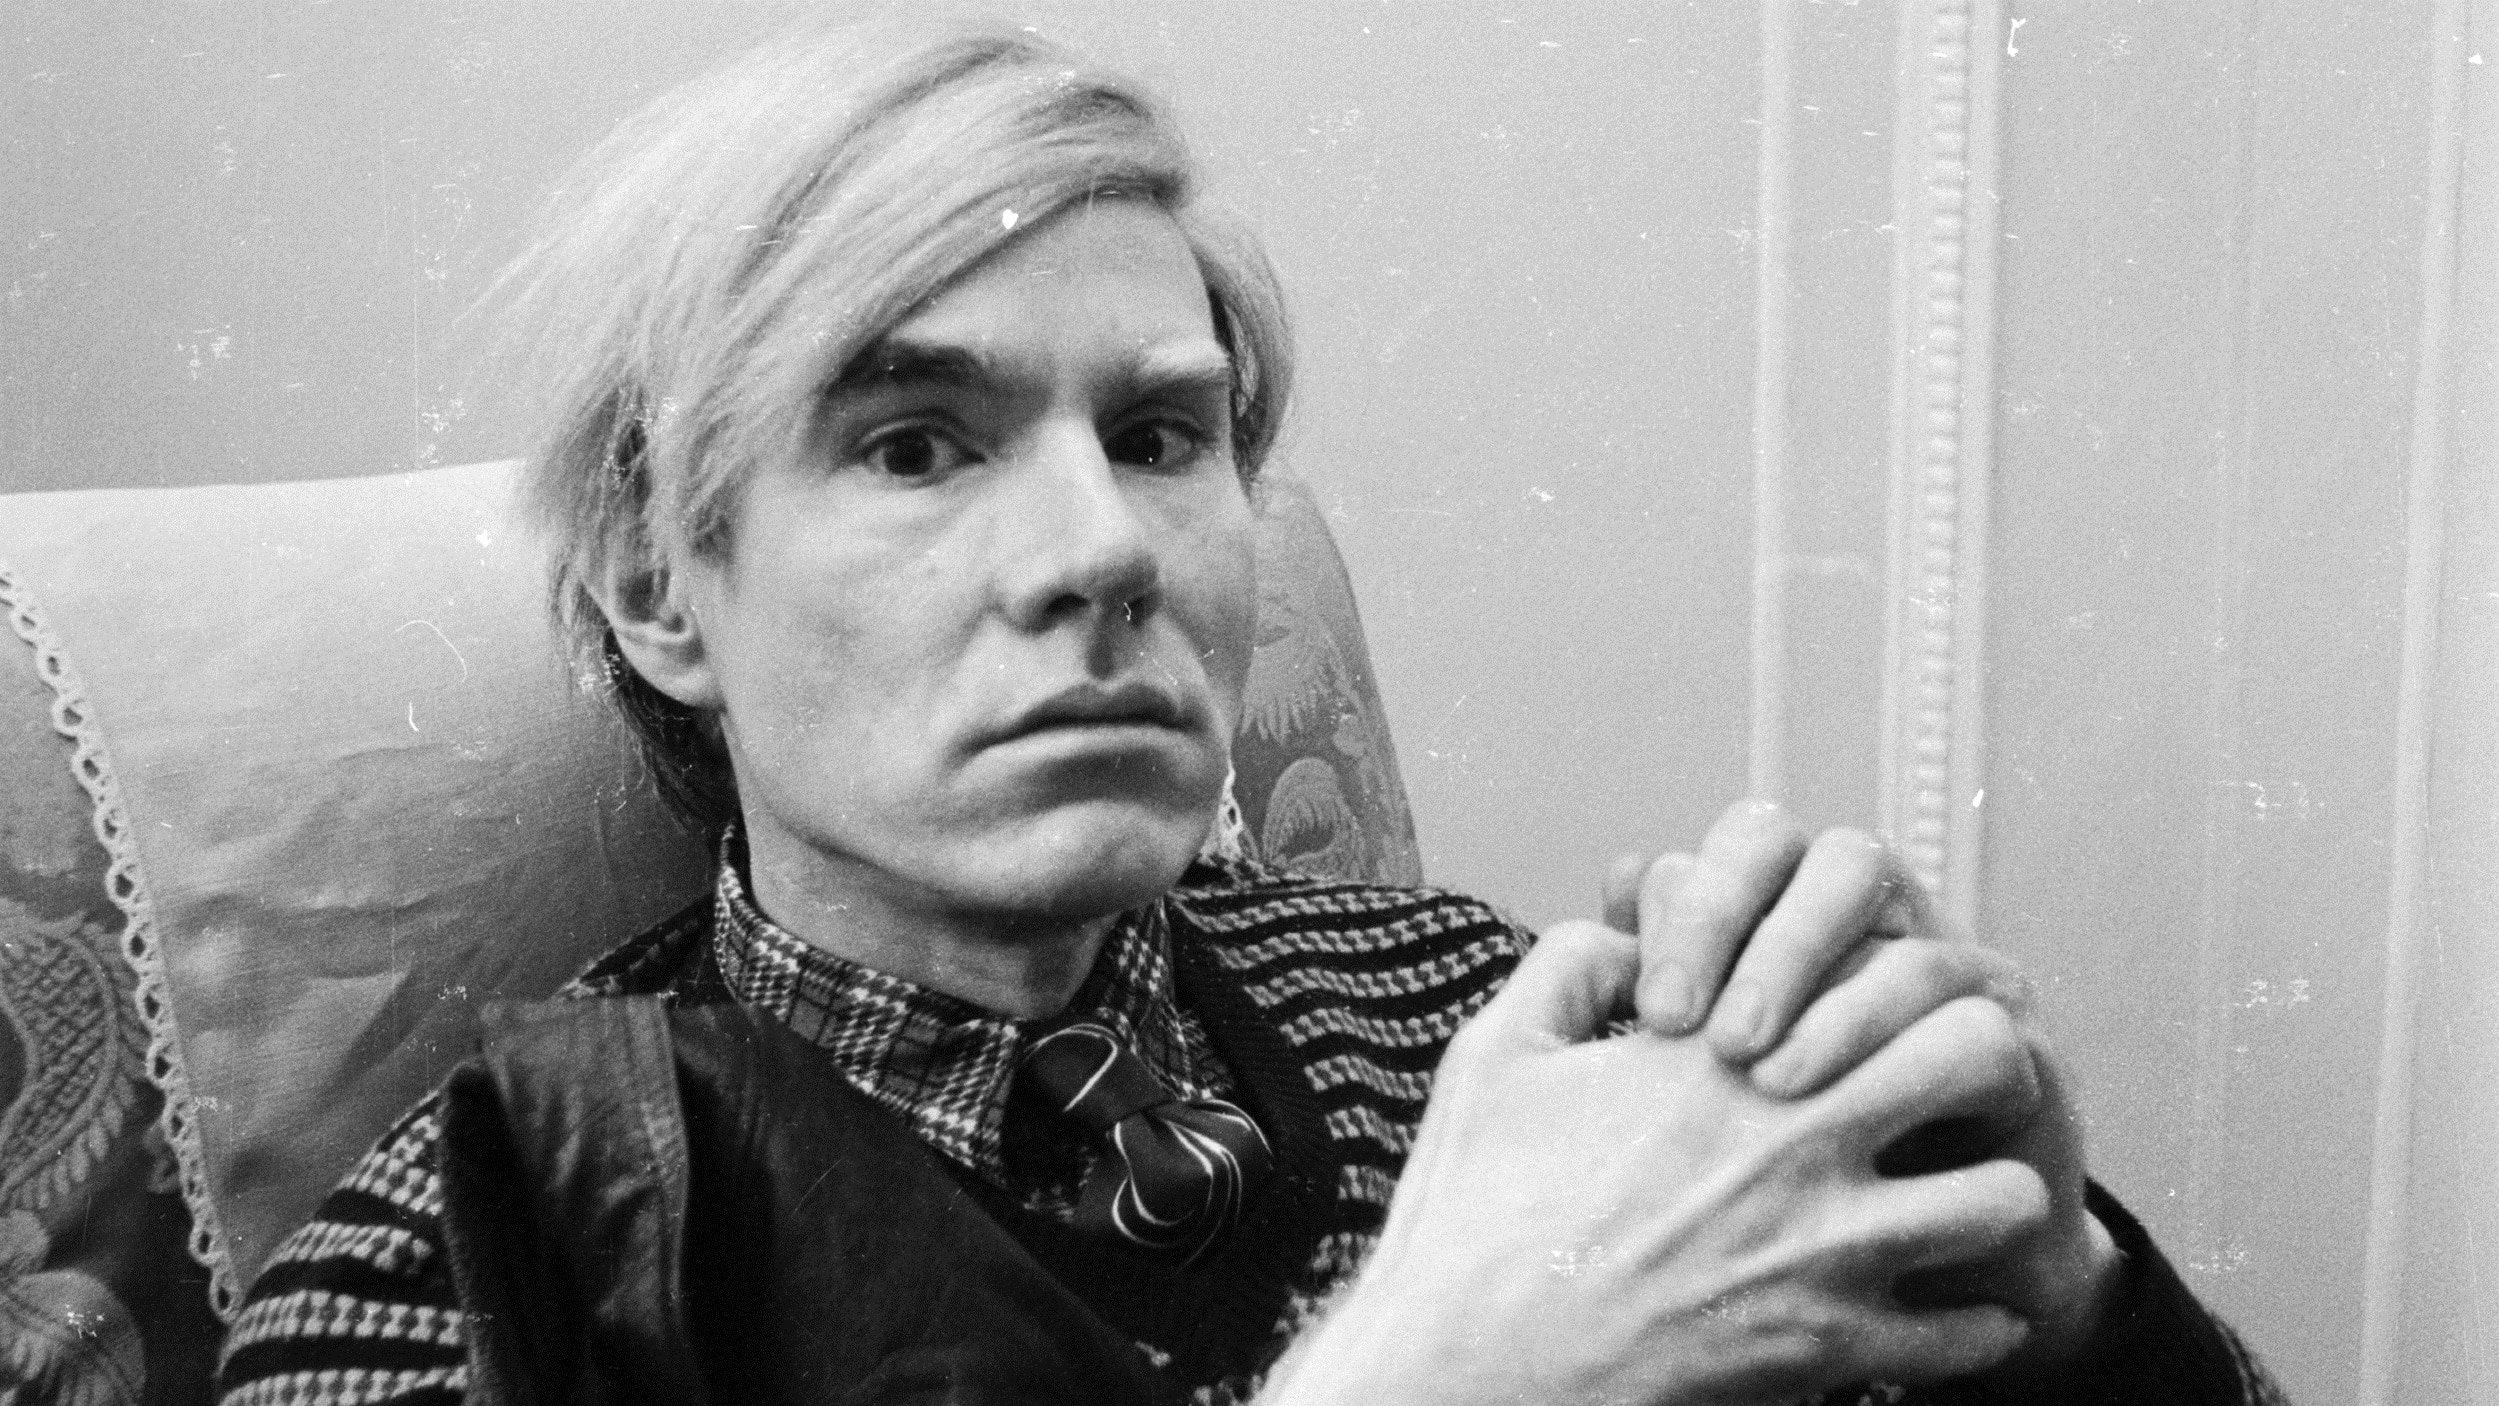 On a vu Andy Warhol diaries avec Luis Clavis et Helen Faradji
On a vu Andy Warhol diaries avec Luis Clavis et Helen Faradji